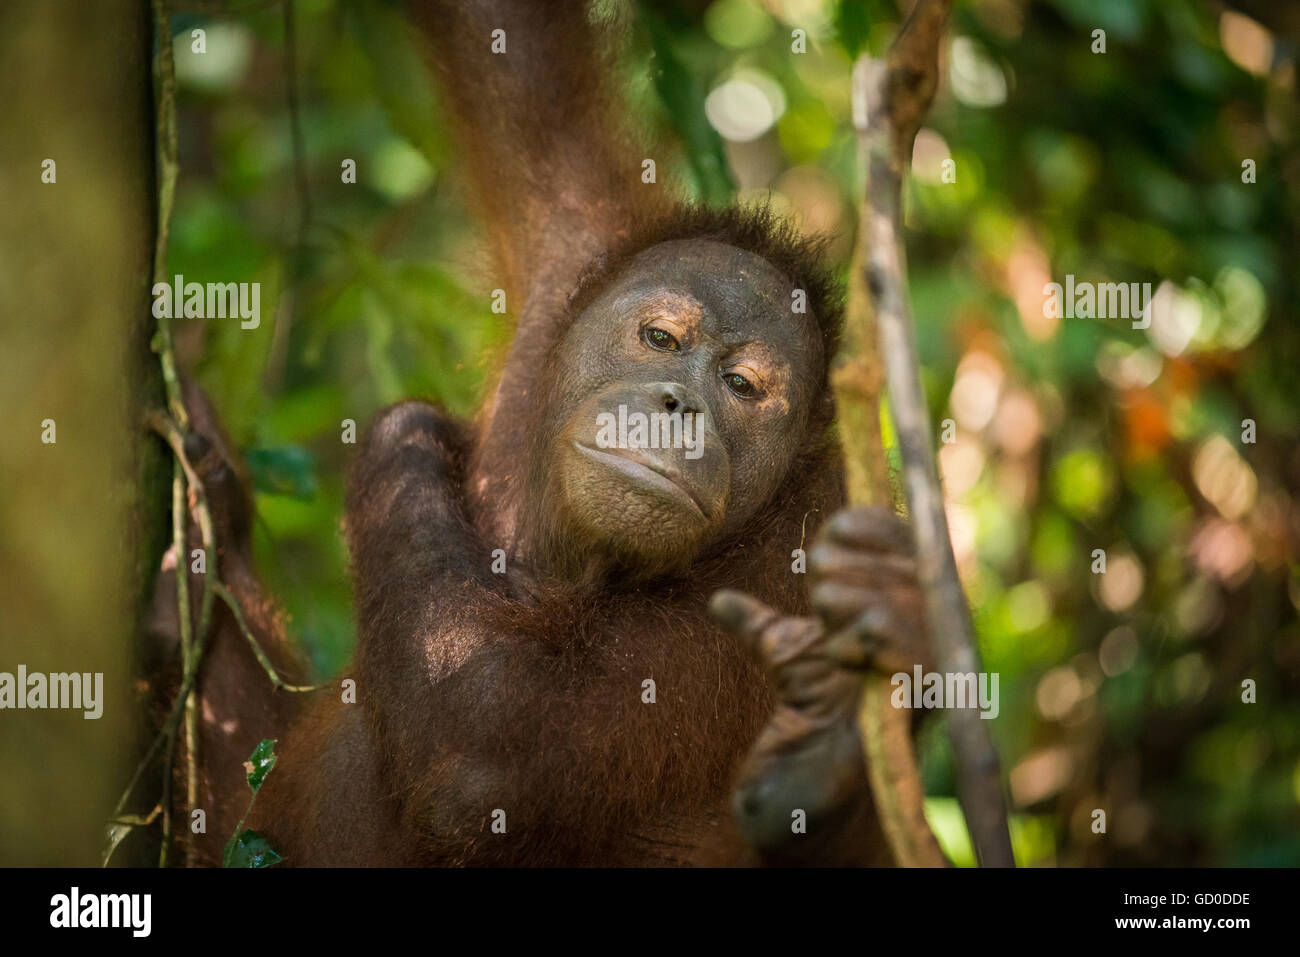 An adult female orangutan swings among the trees at a wildlife sanctuary in Malaysian Borneo. Stock Photo